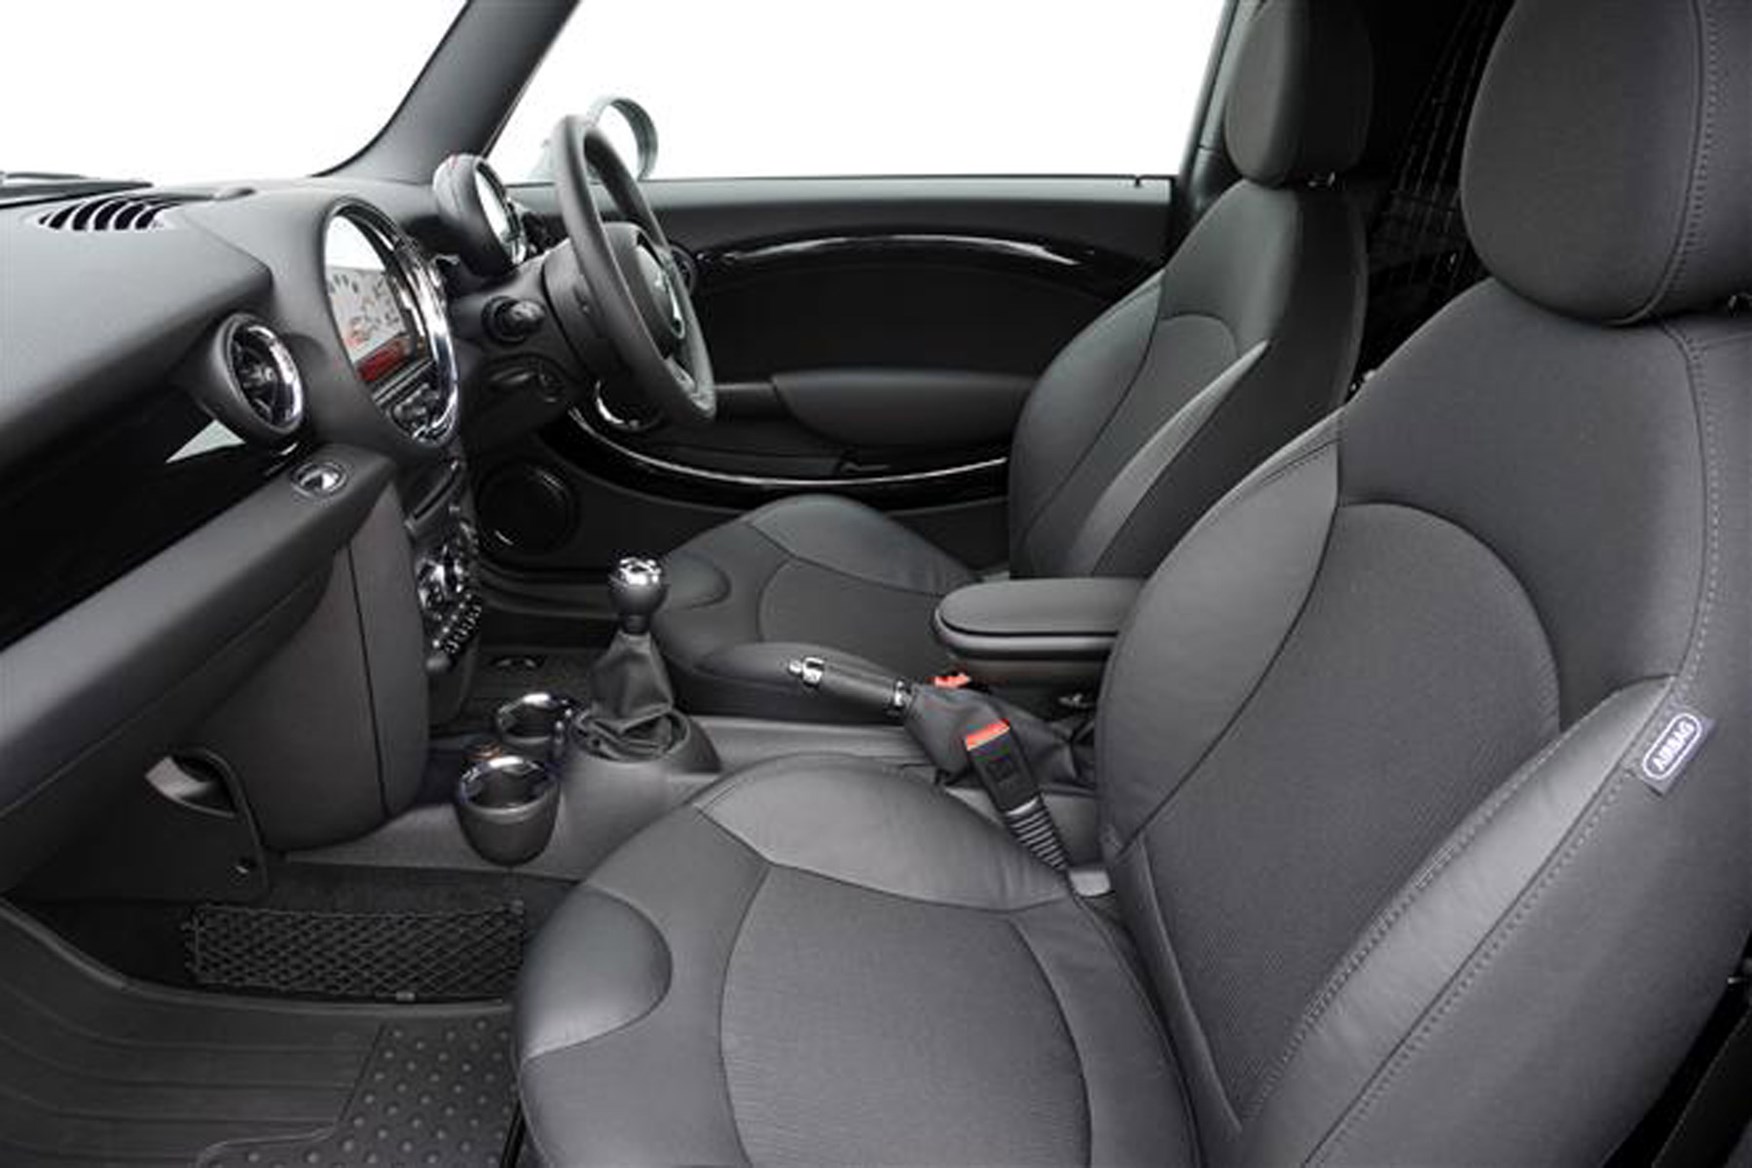 MINI Clubvan review on Parkers Vans - interior